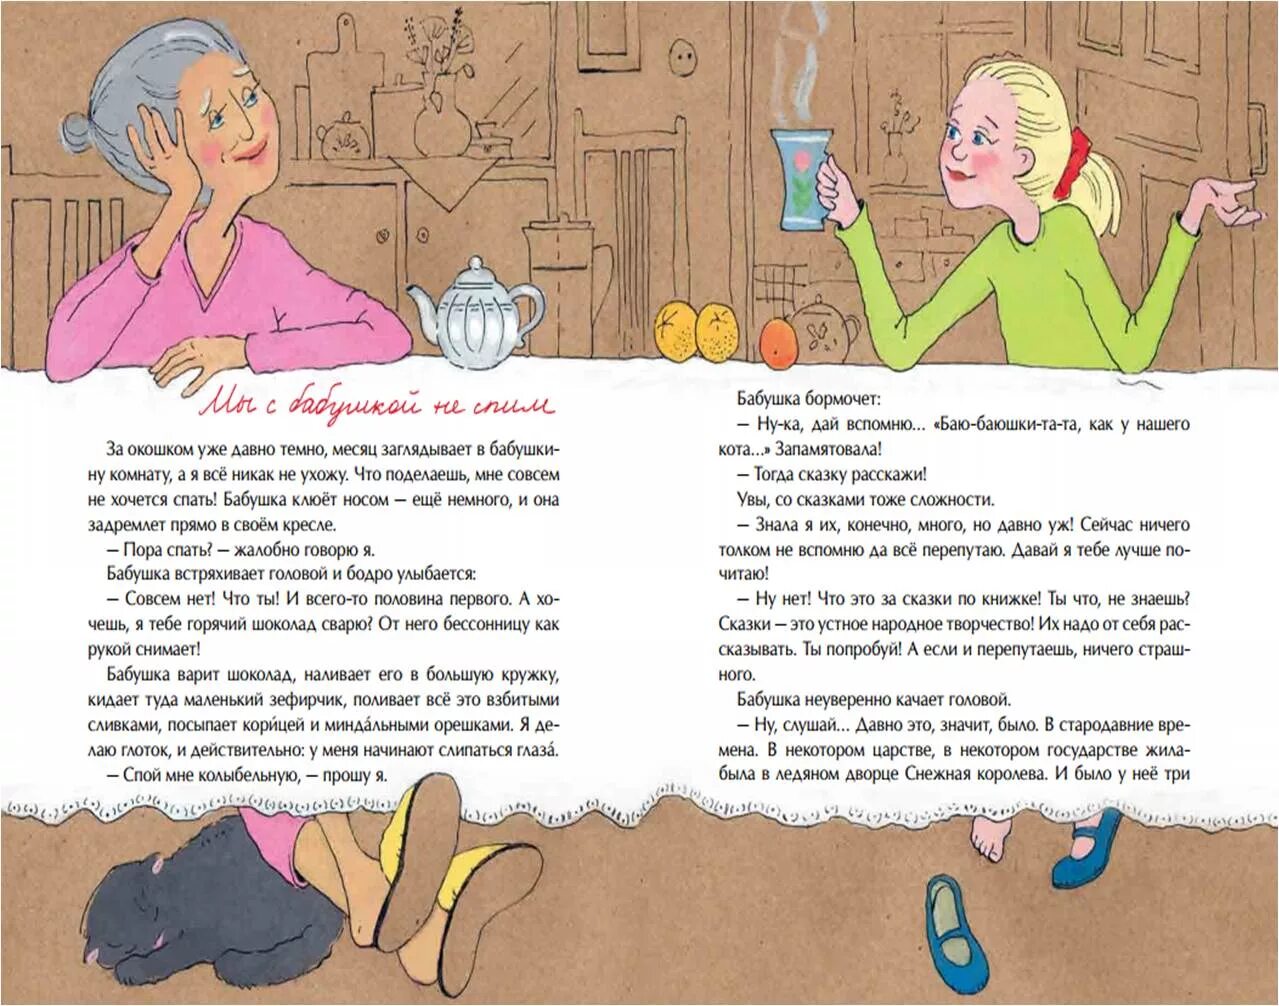 Сказки на ночь про бабушку. Рассказ про бабушку. Сочинение про бабушку. Hfpprfp j ,f,EIRT. Написать рассказ о бабушке.